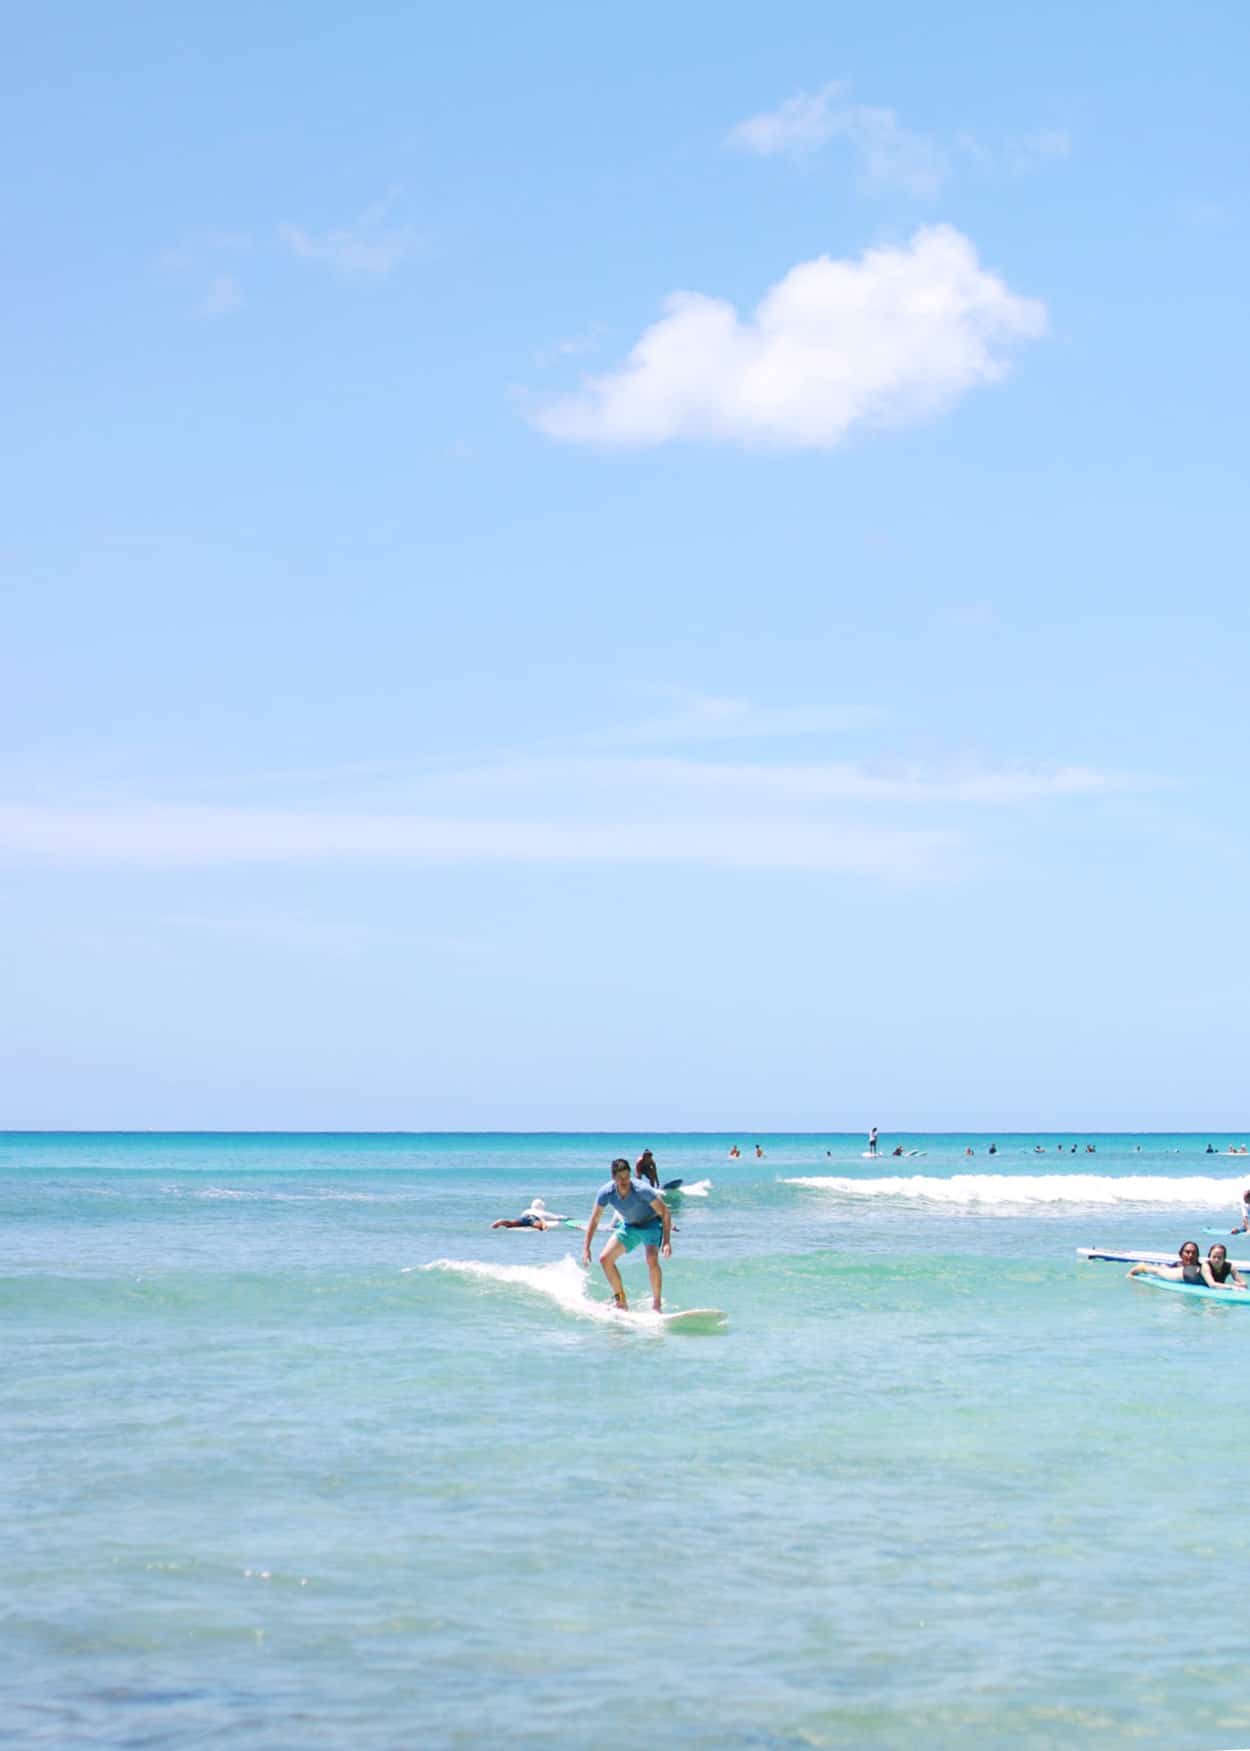 Surfing at Waikiki Beach on Honolulu, Hawaii